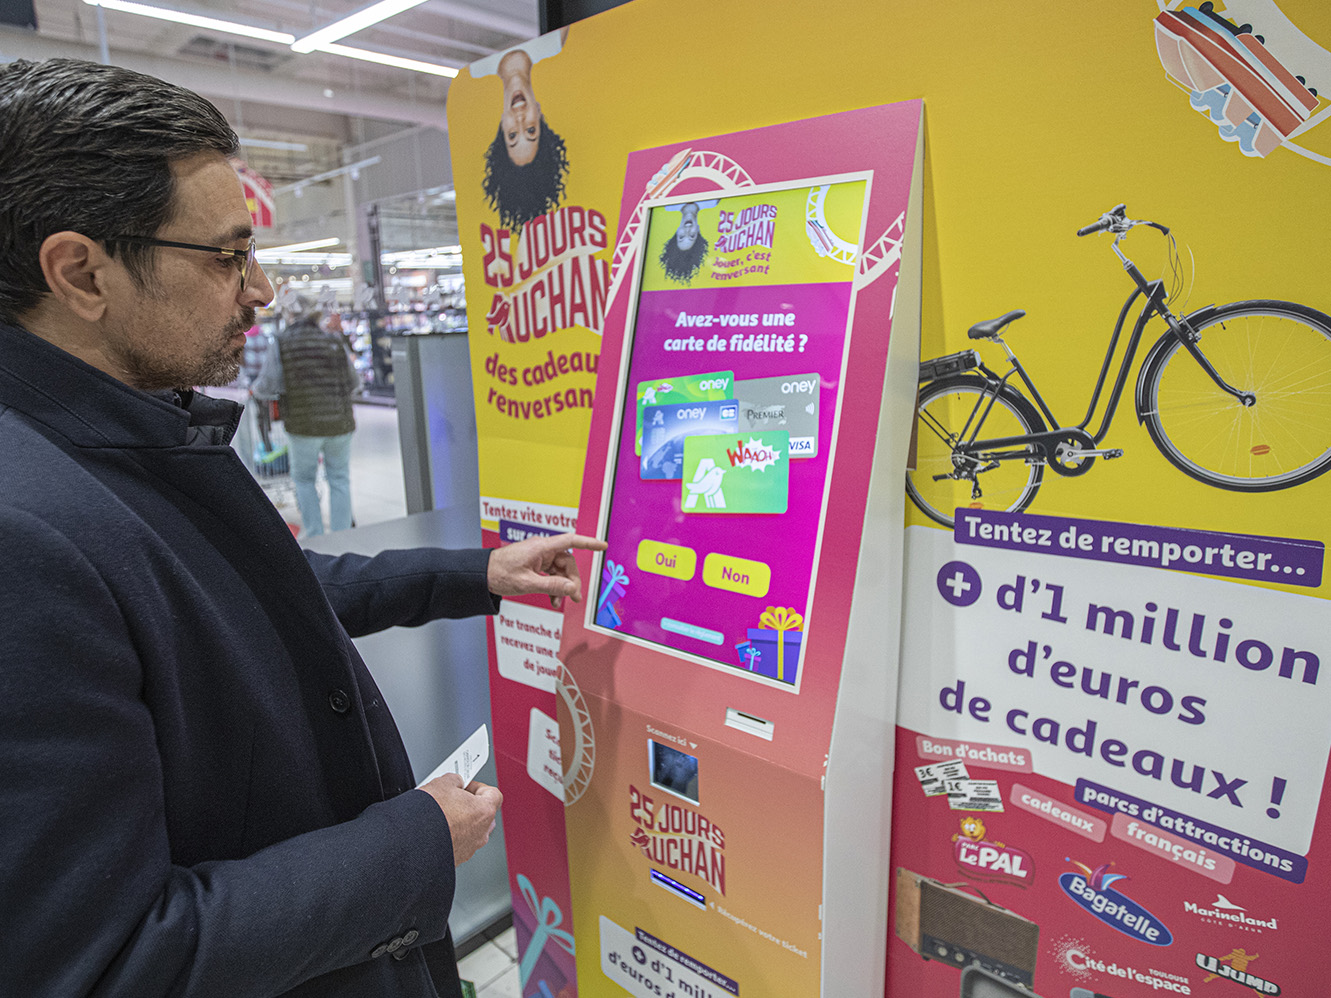 Auchan- weezio bornes - bornes interactives